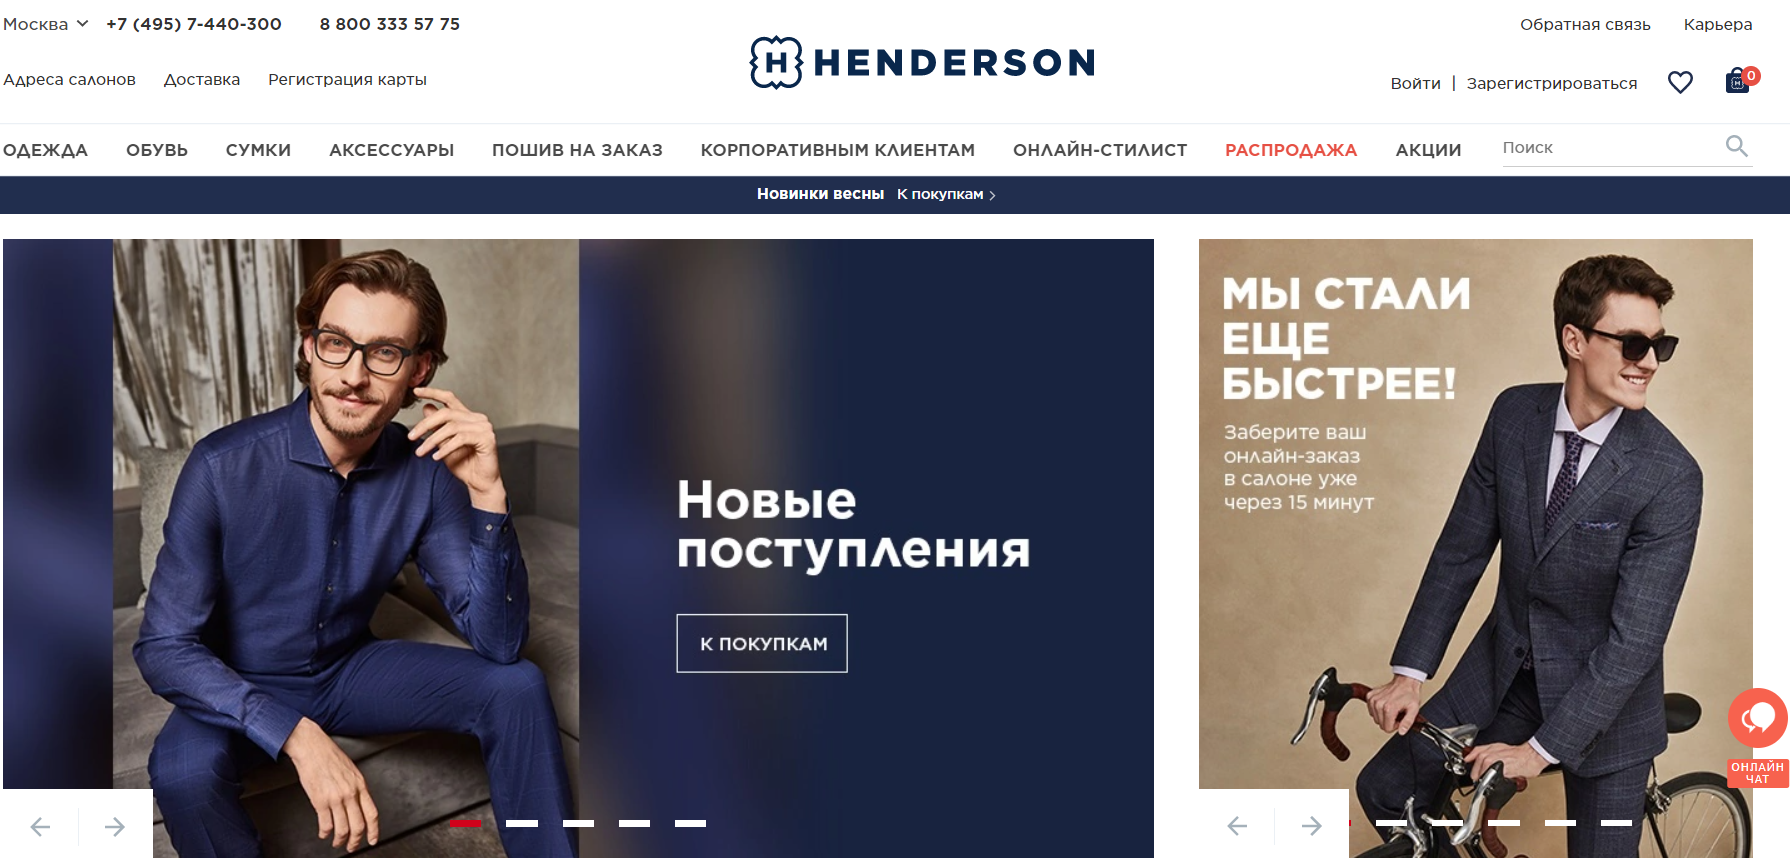 HENDERSON сайт интернет-магазина